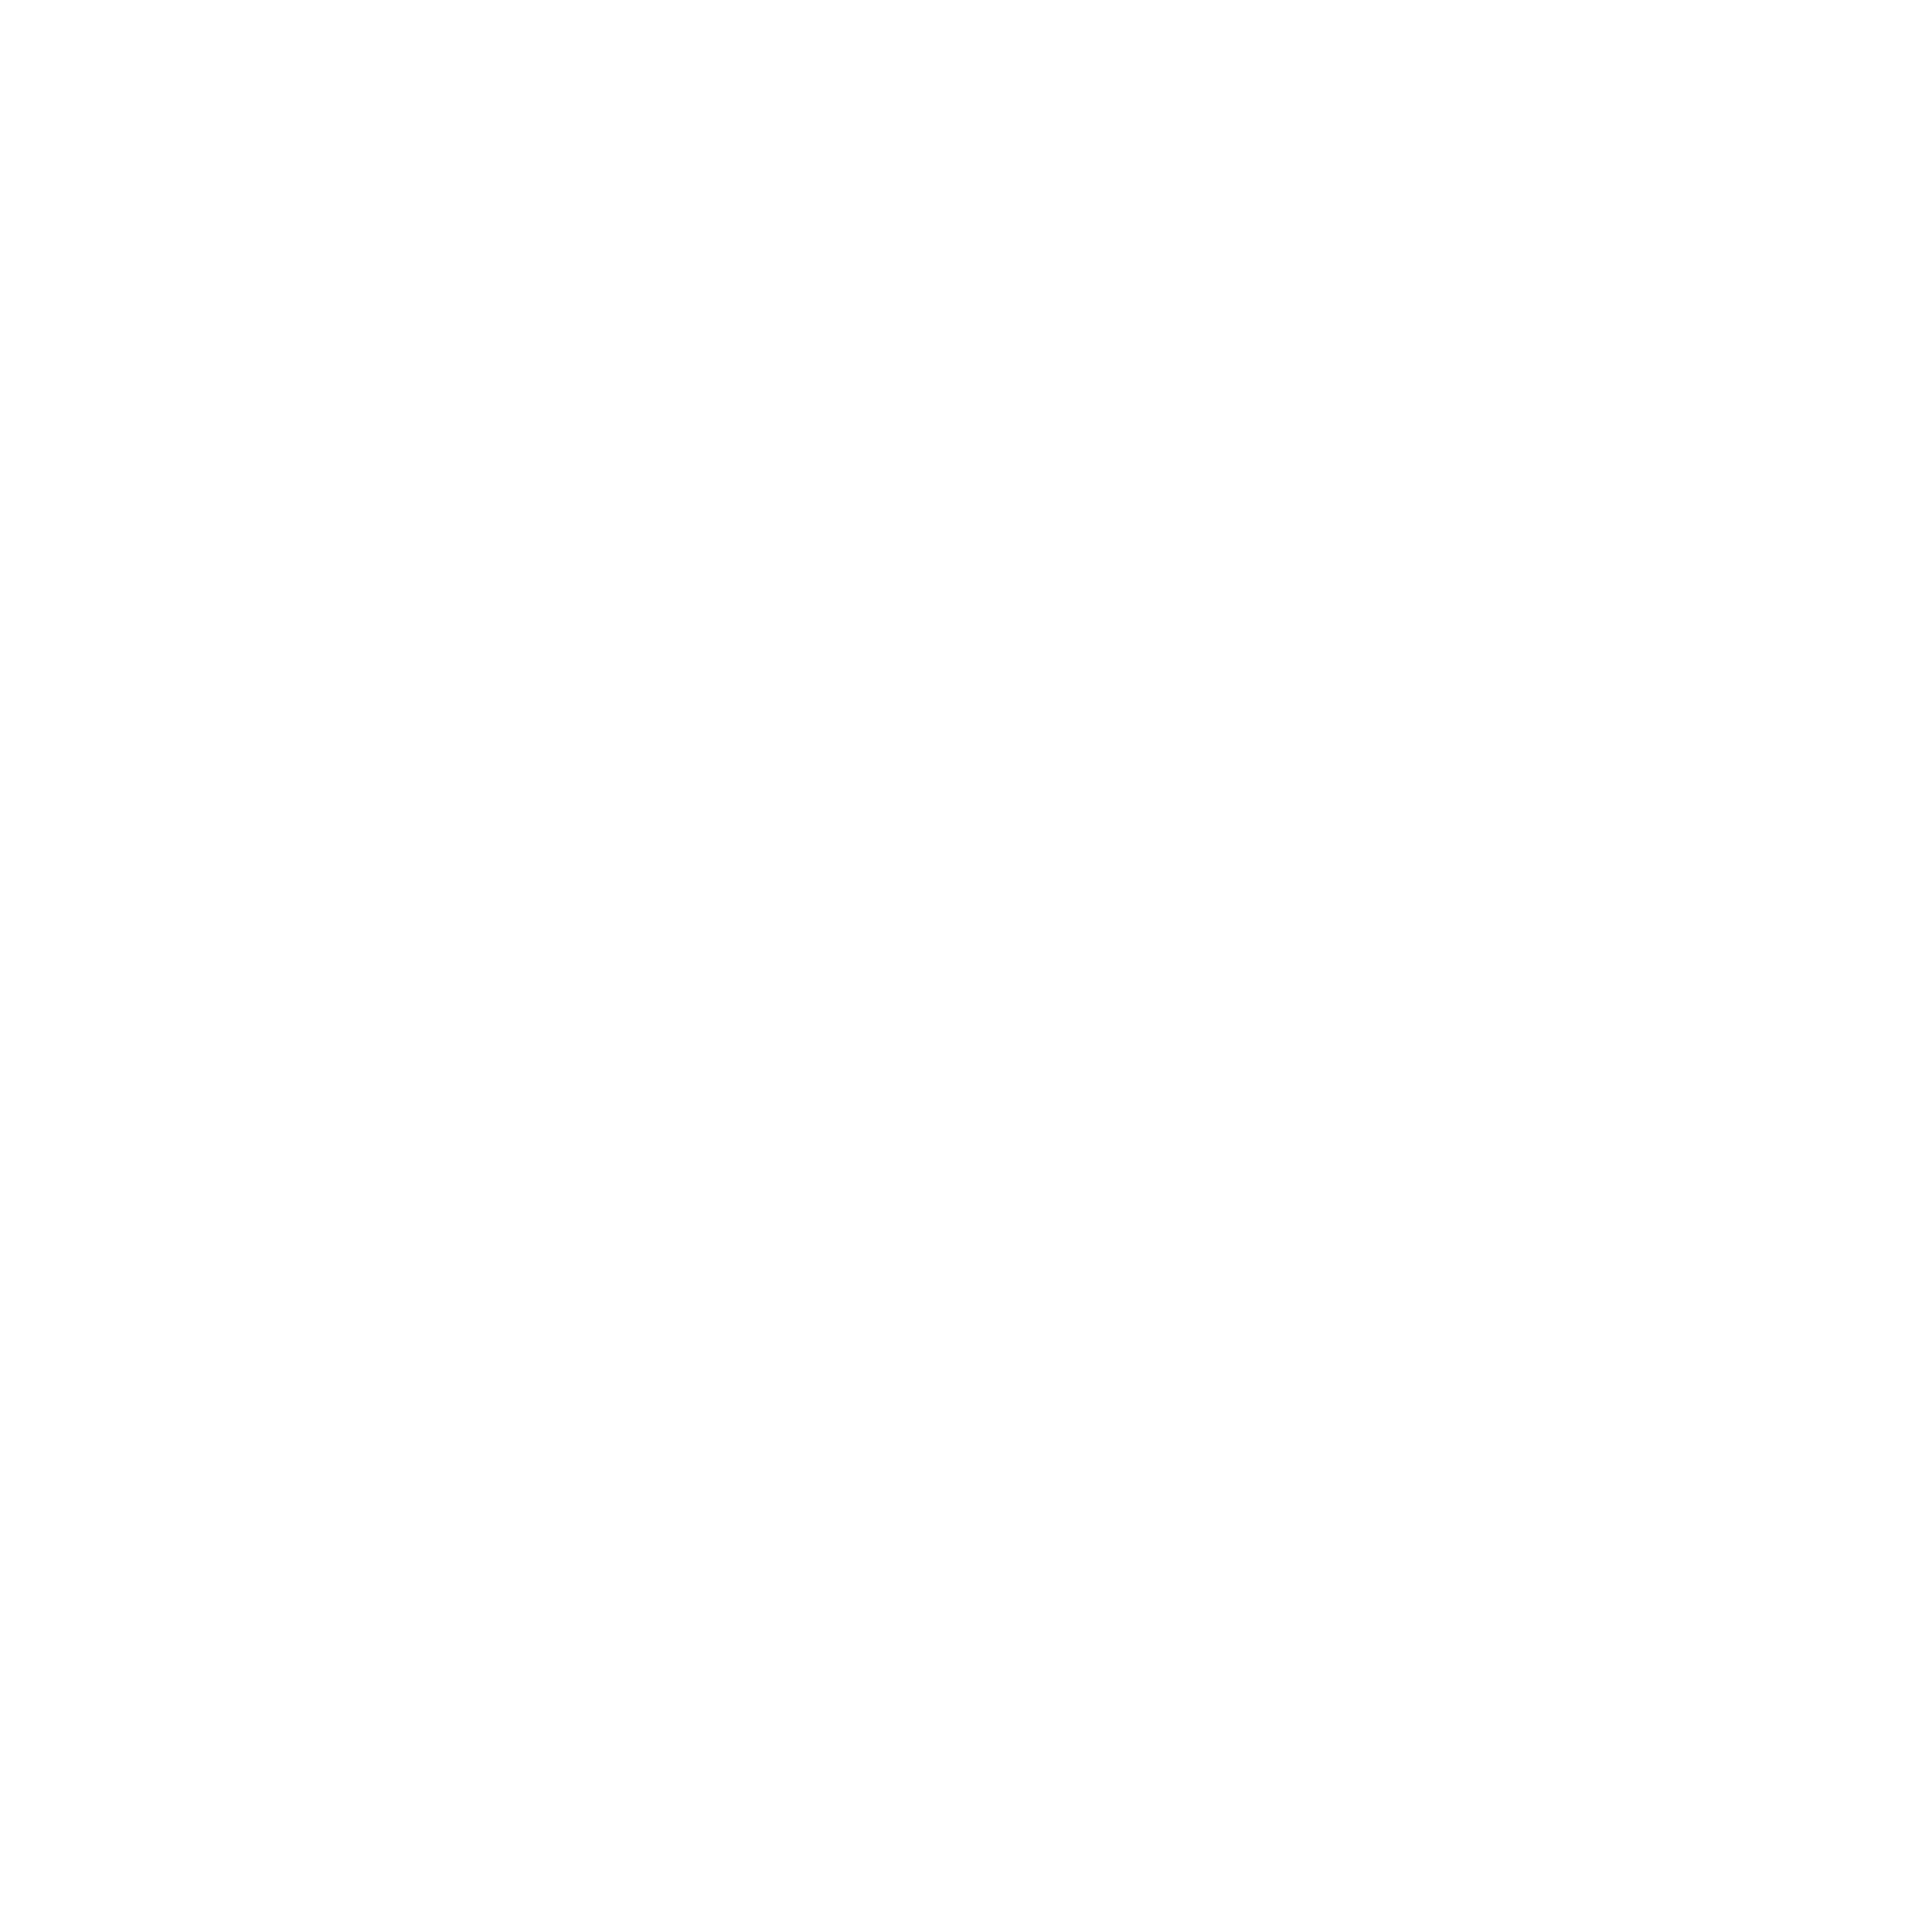 ELEMENT Logo